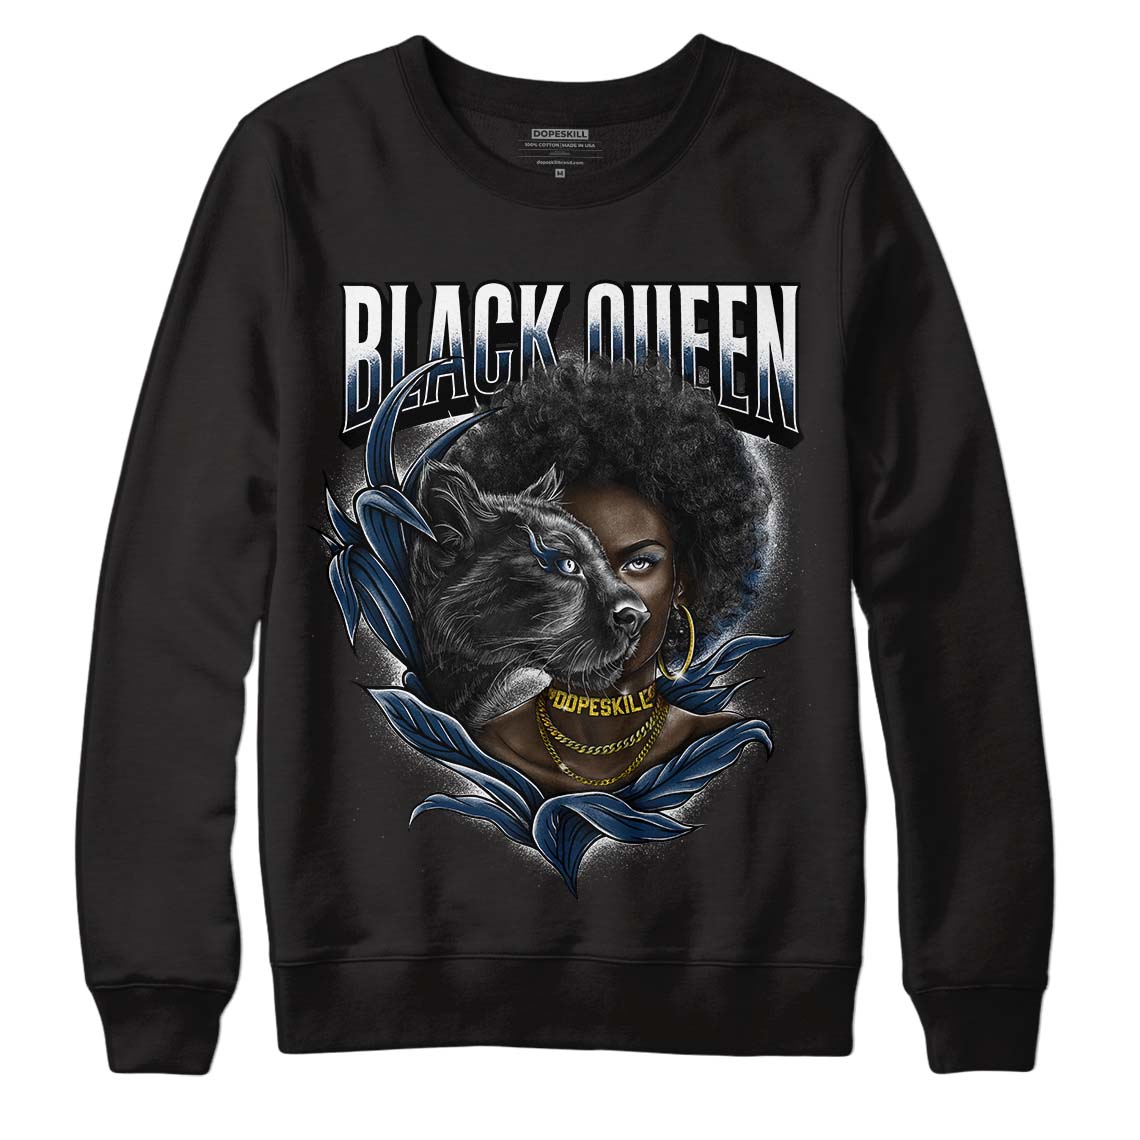 Brave Blue 13s DopeSkill Sweatshirt New Black Queen Graphic - Black 